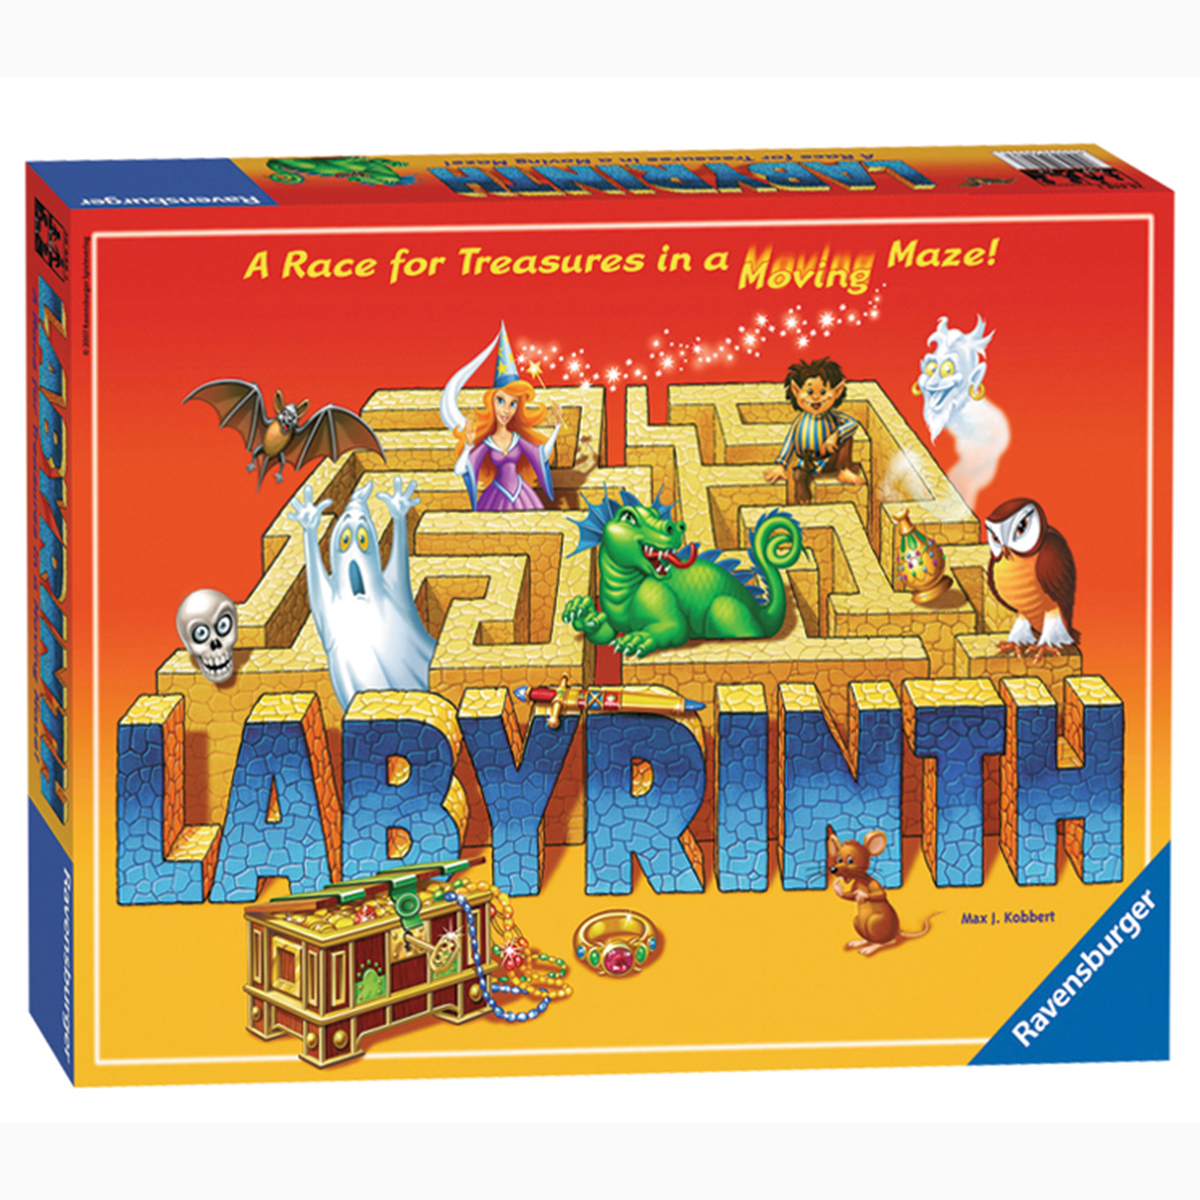  Labyrinth Game 